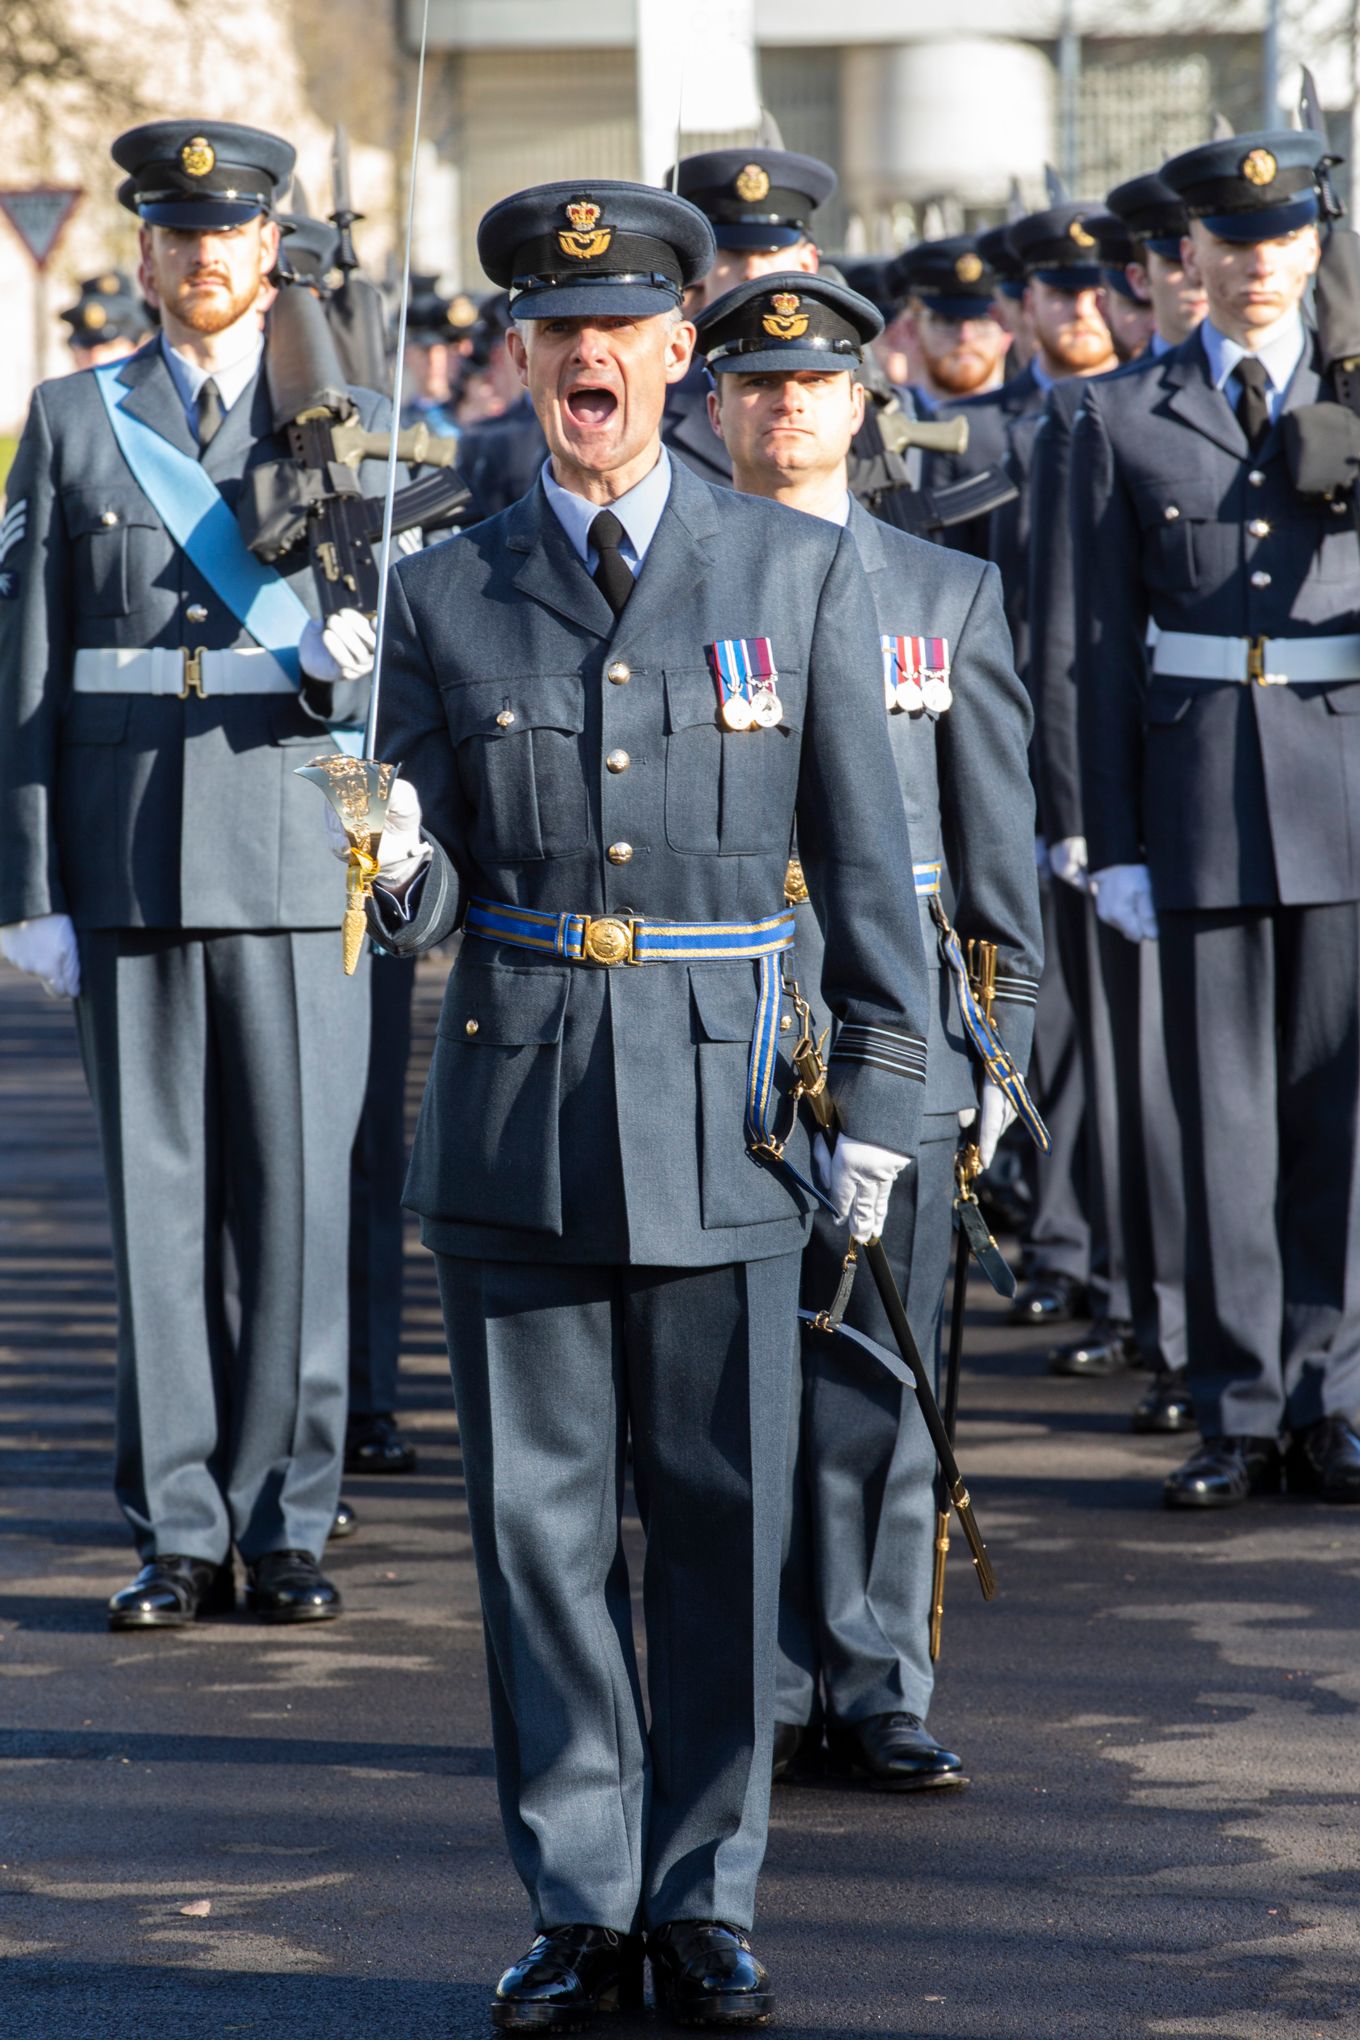 Sqn Ldr Kerrison as parade commander